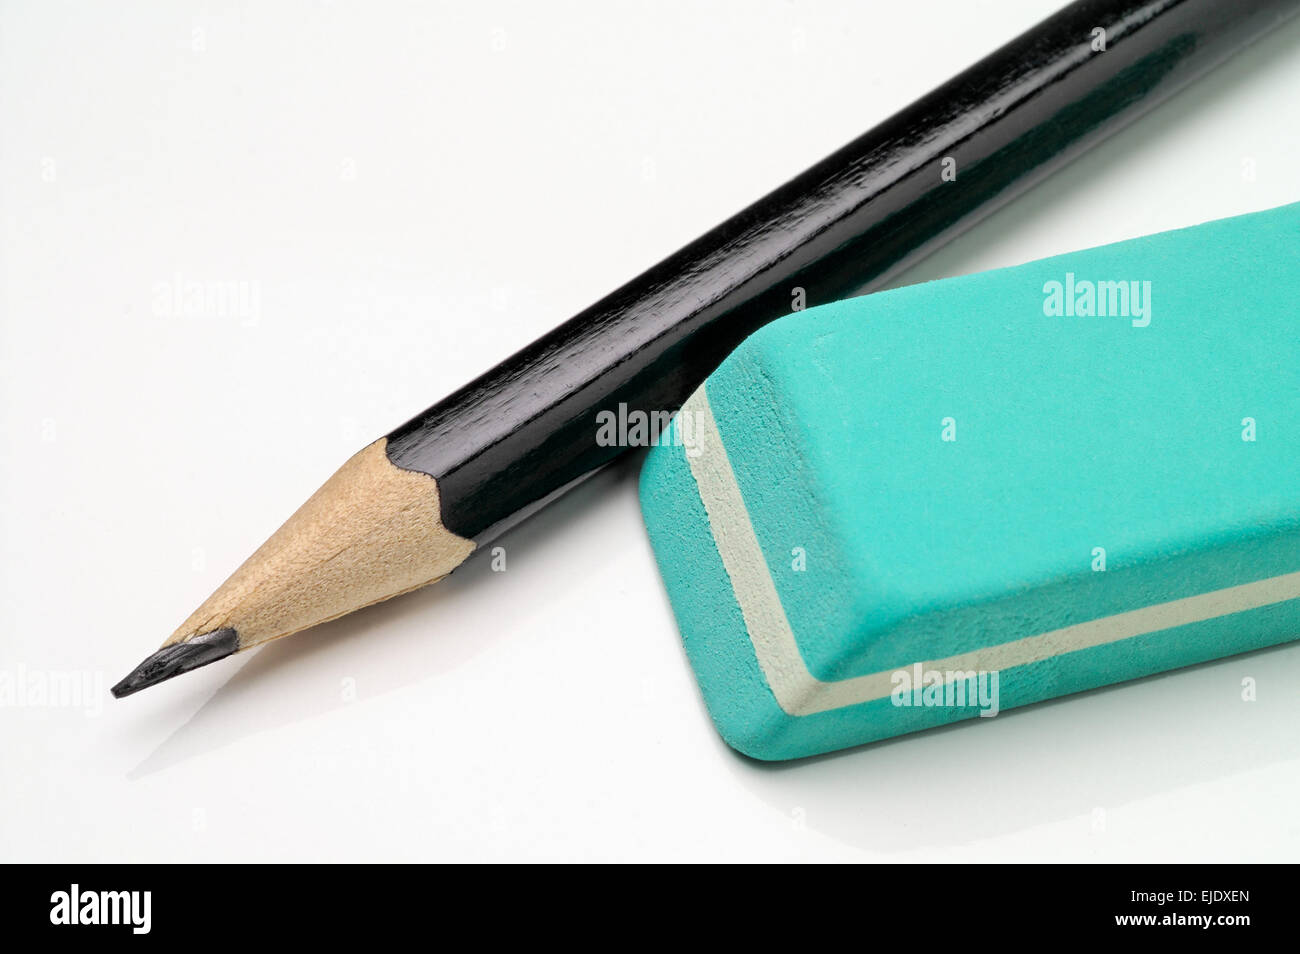 Write and delete - pencil and eraser closeup Stock Photo